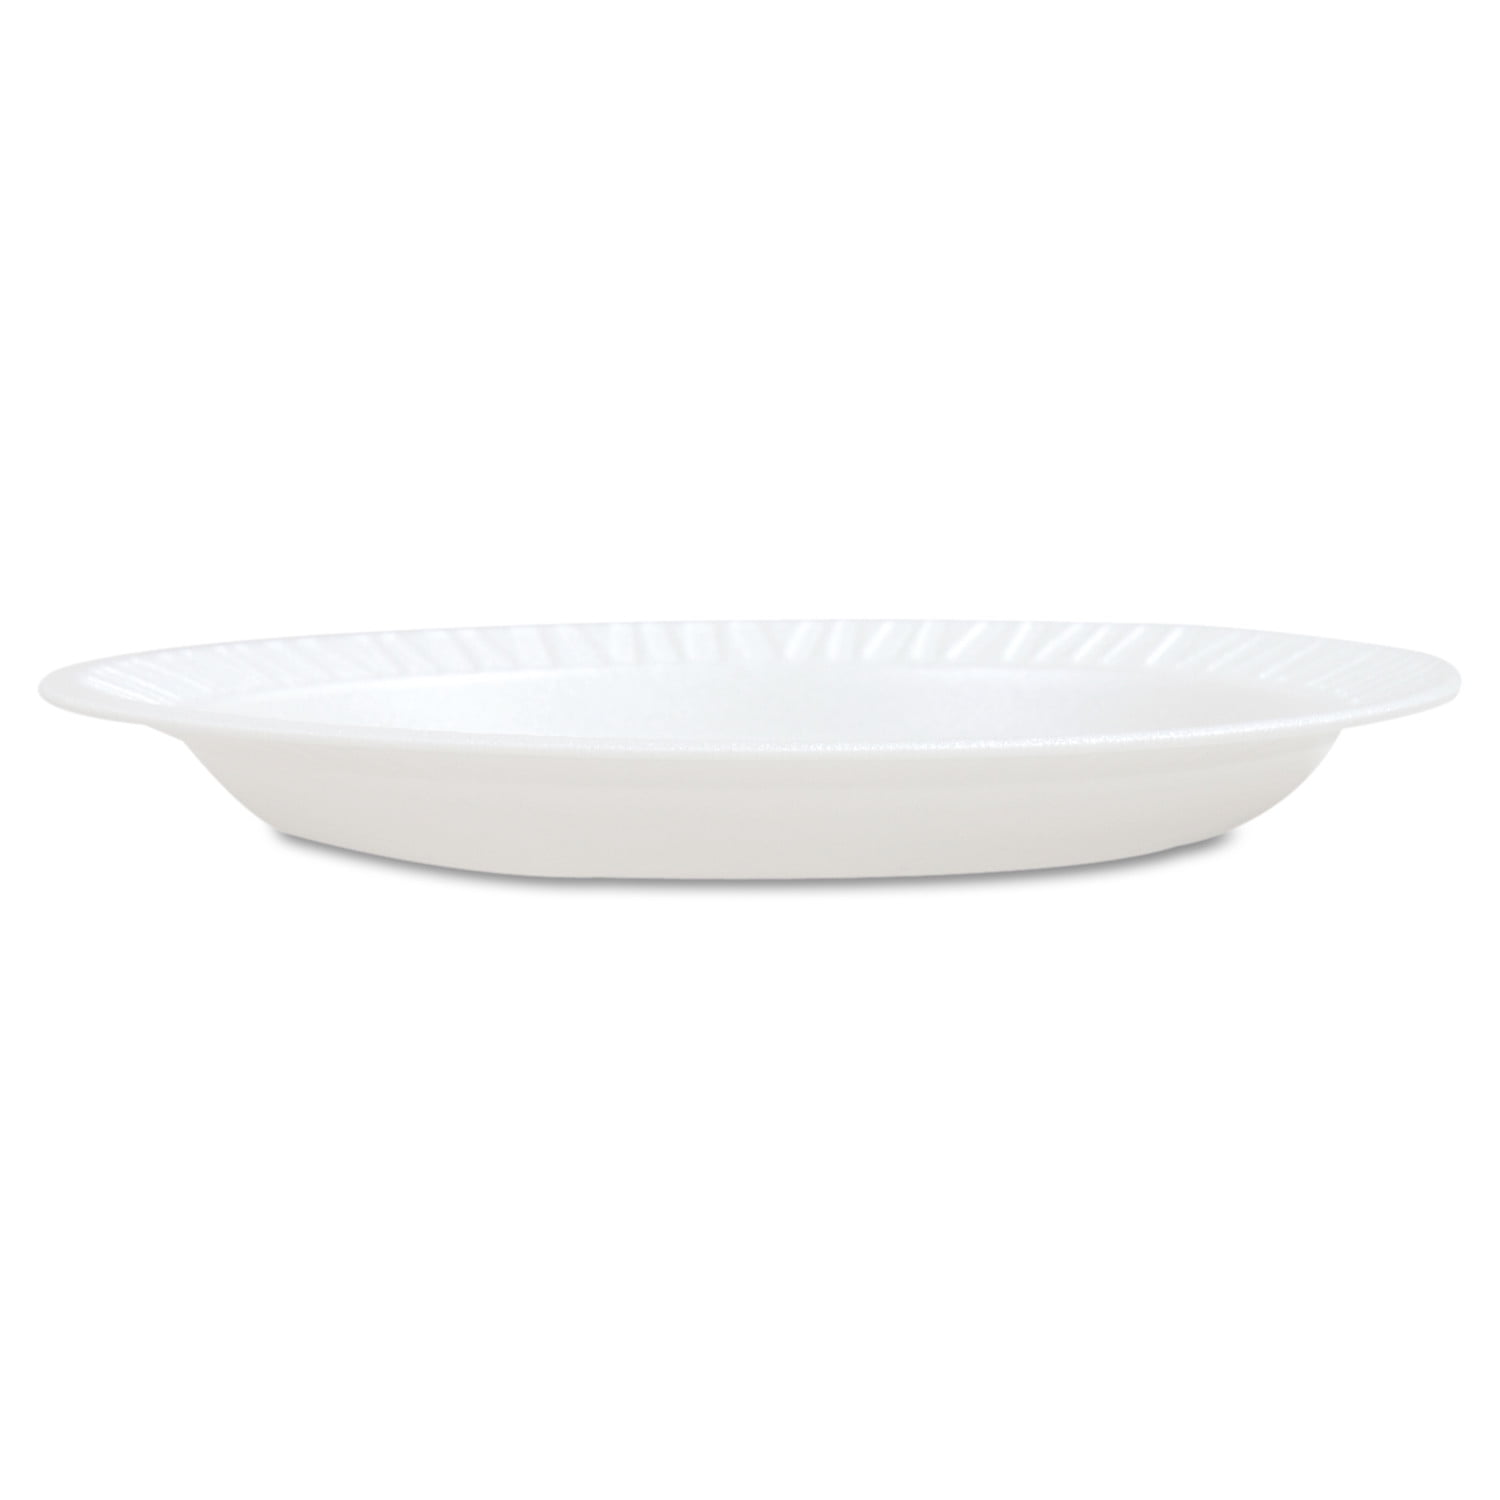 Dart® Concorde® Plate 7 IN Polystyrene Foam White Round 1000/Case